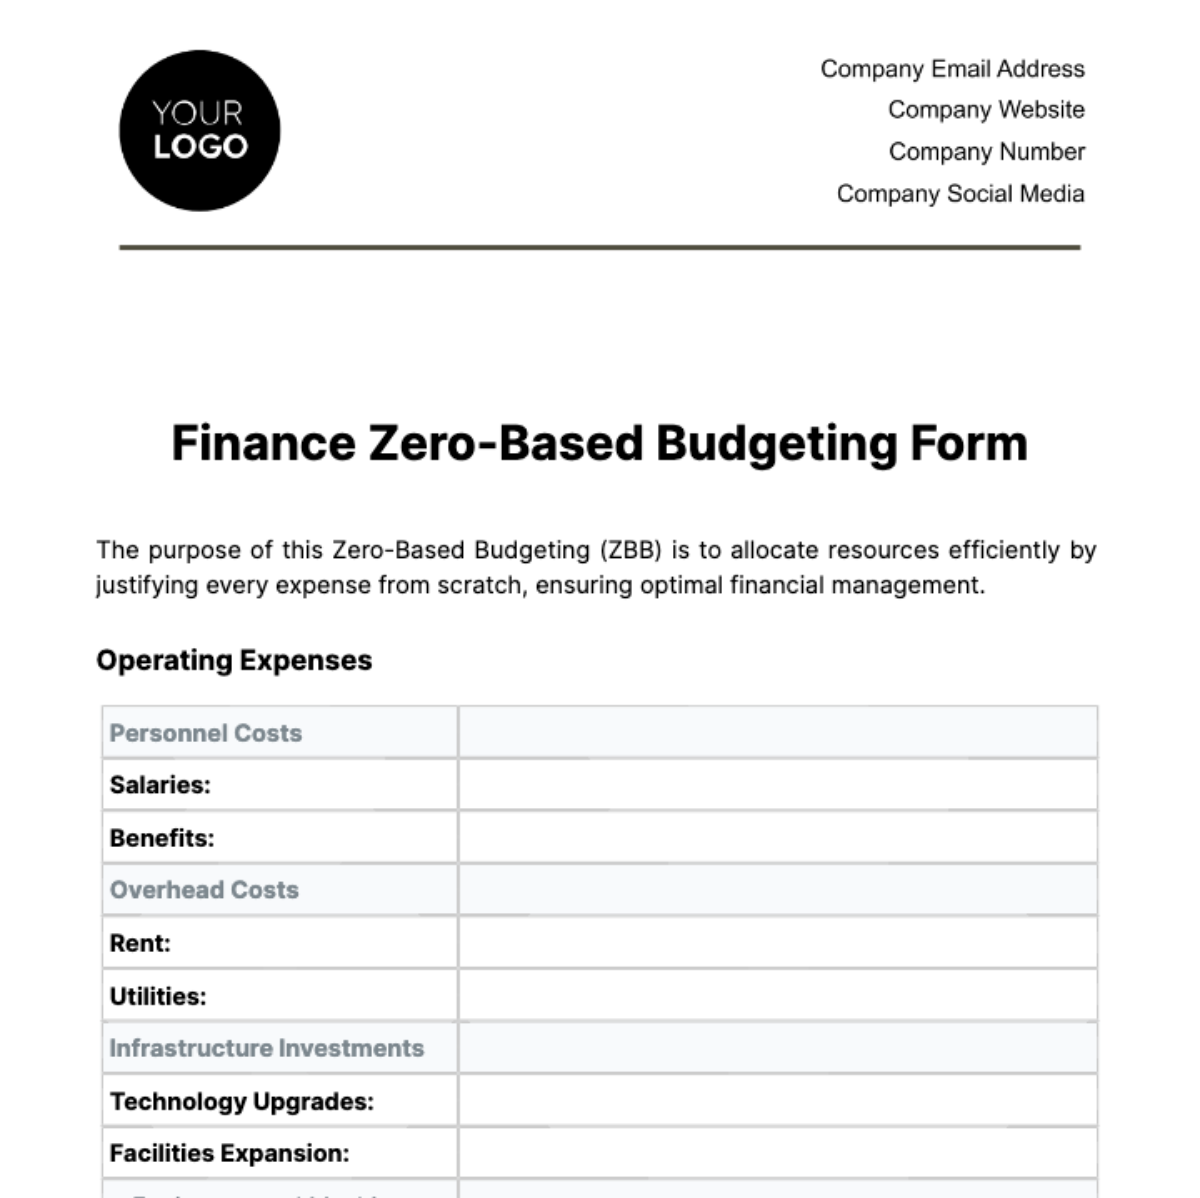 Finance Zero-Based Budgeting Form Template